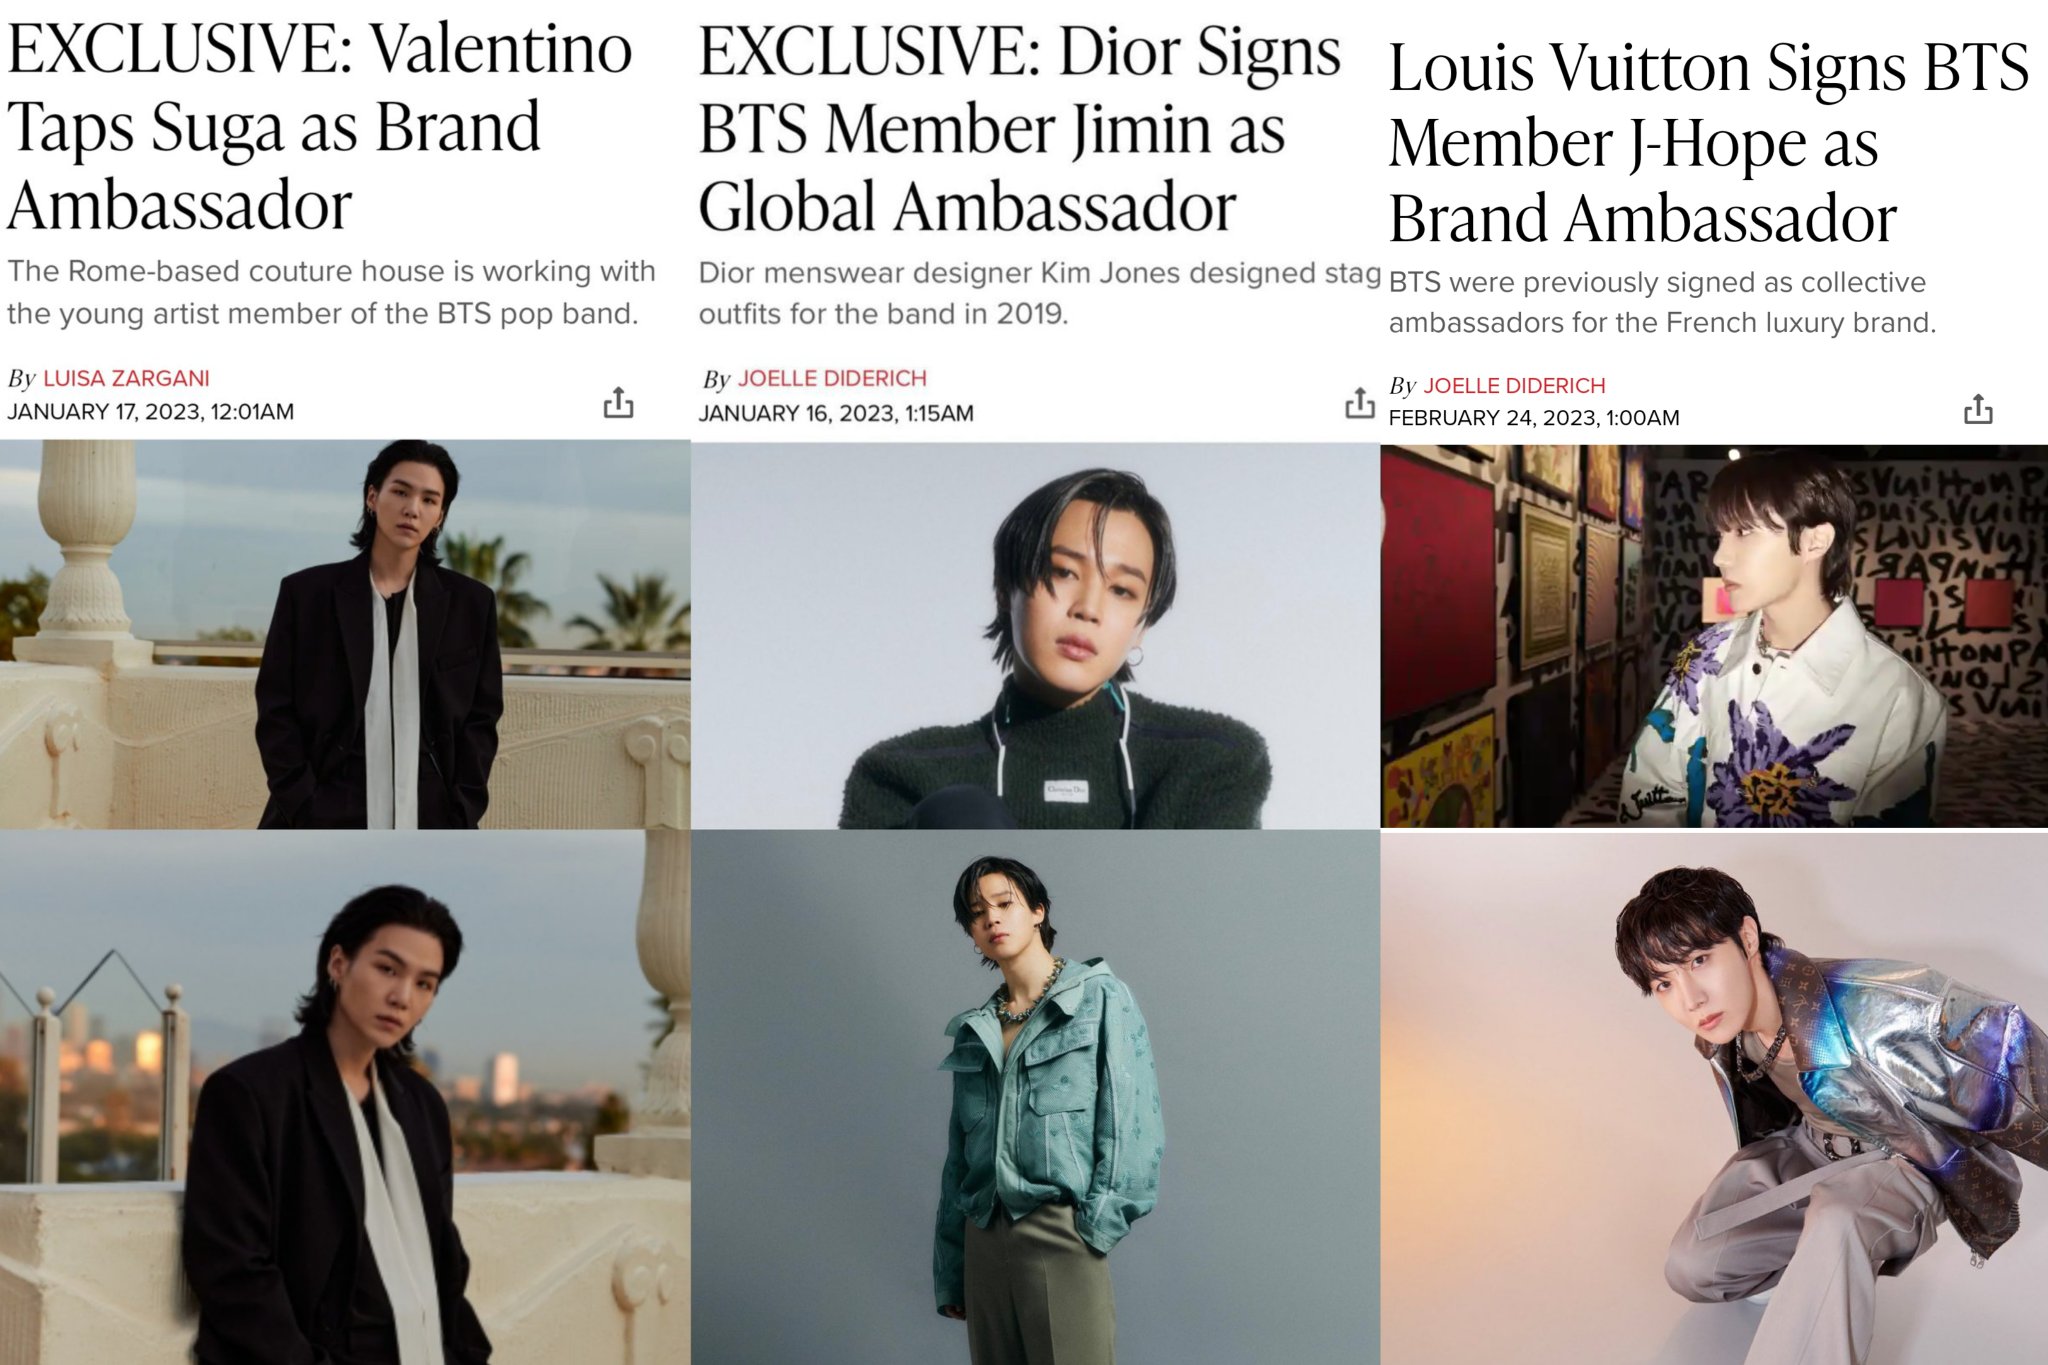 Louis Vuitton Announces BTS Member J-Hope As New Brand Ambassador